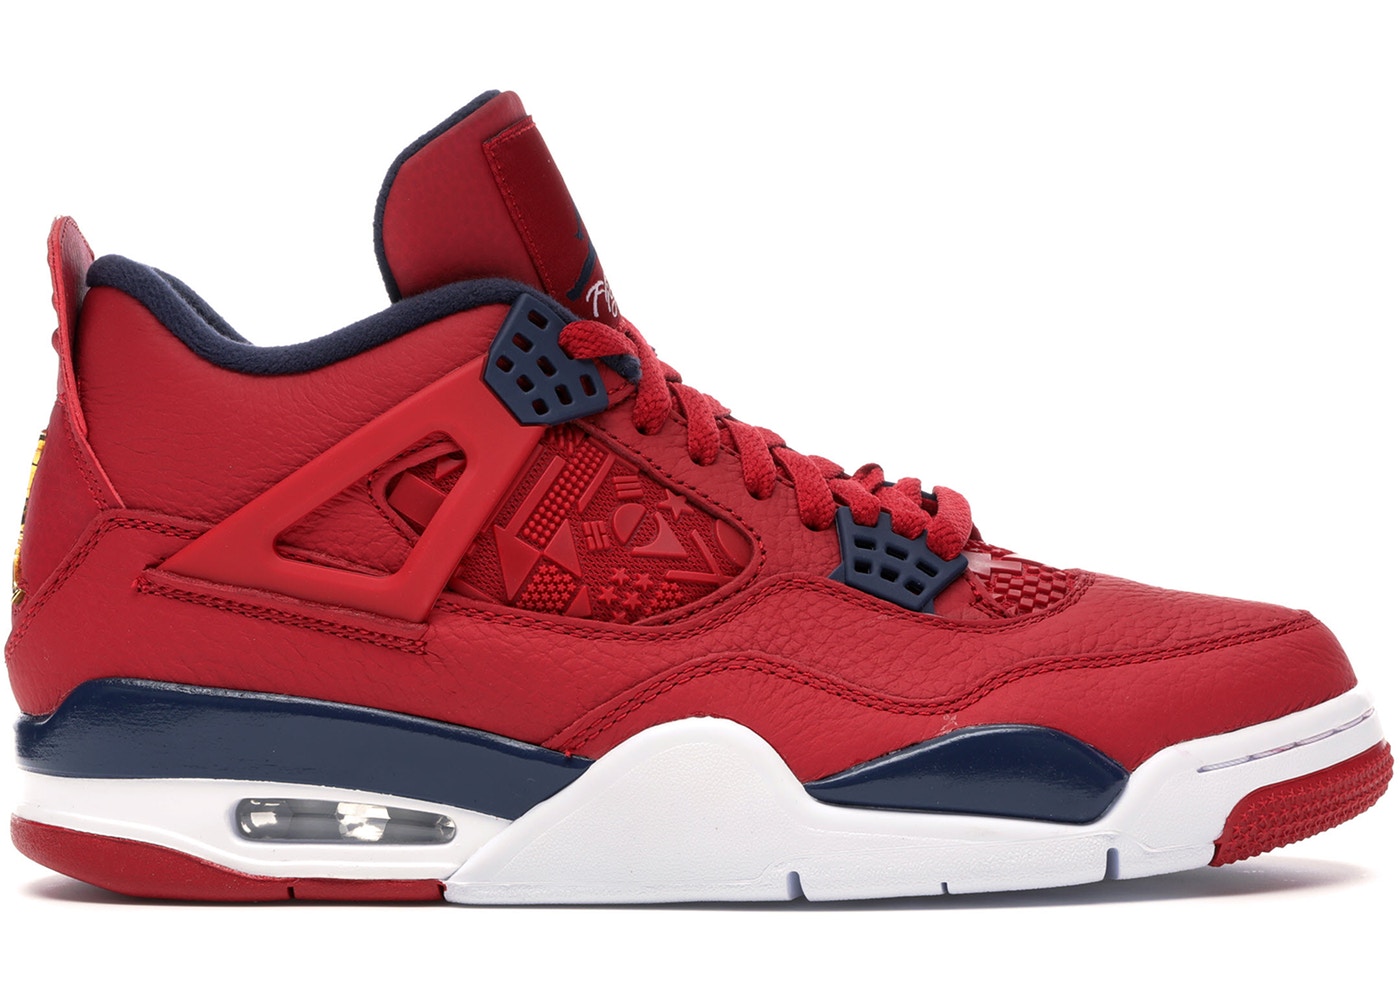 Now Available: Air Jordan 4 Retro SE "FIBA" — Sneaker Shouts